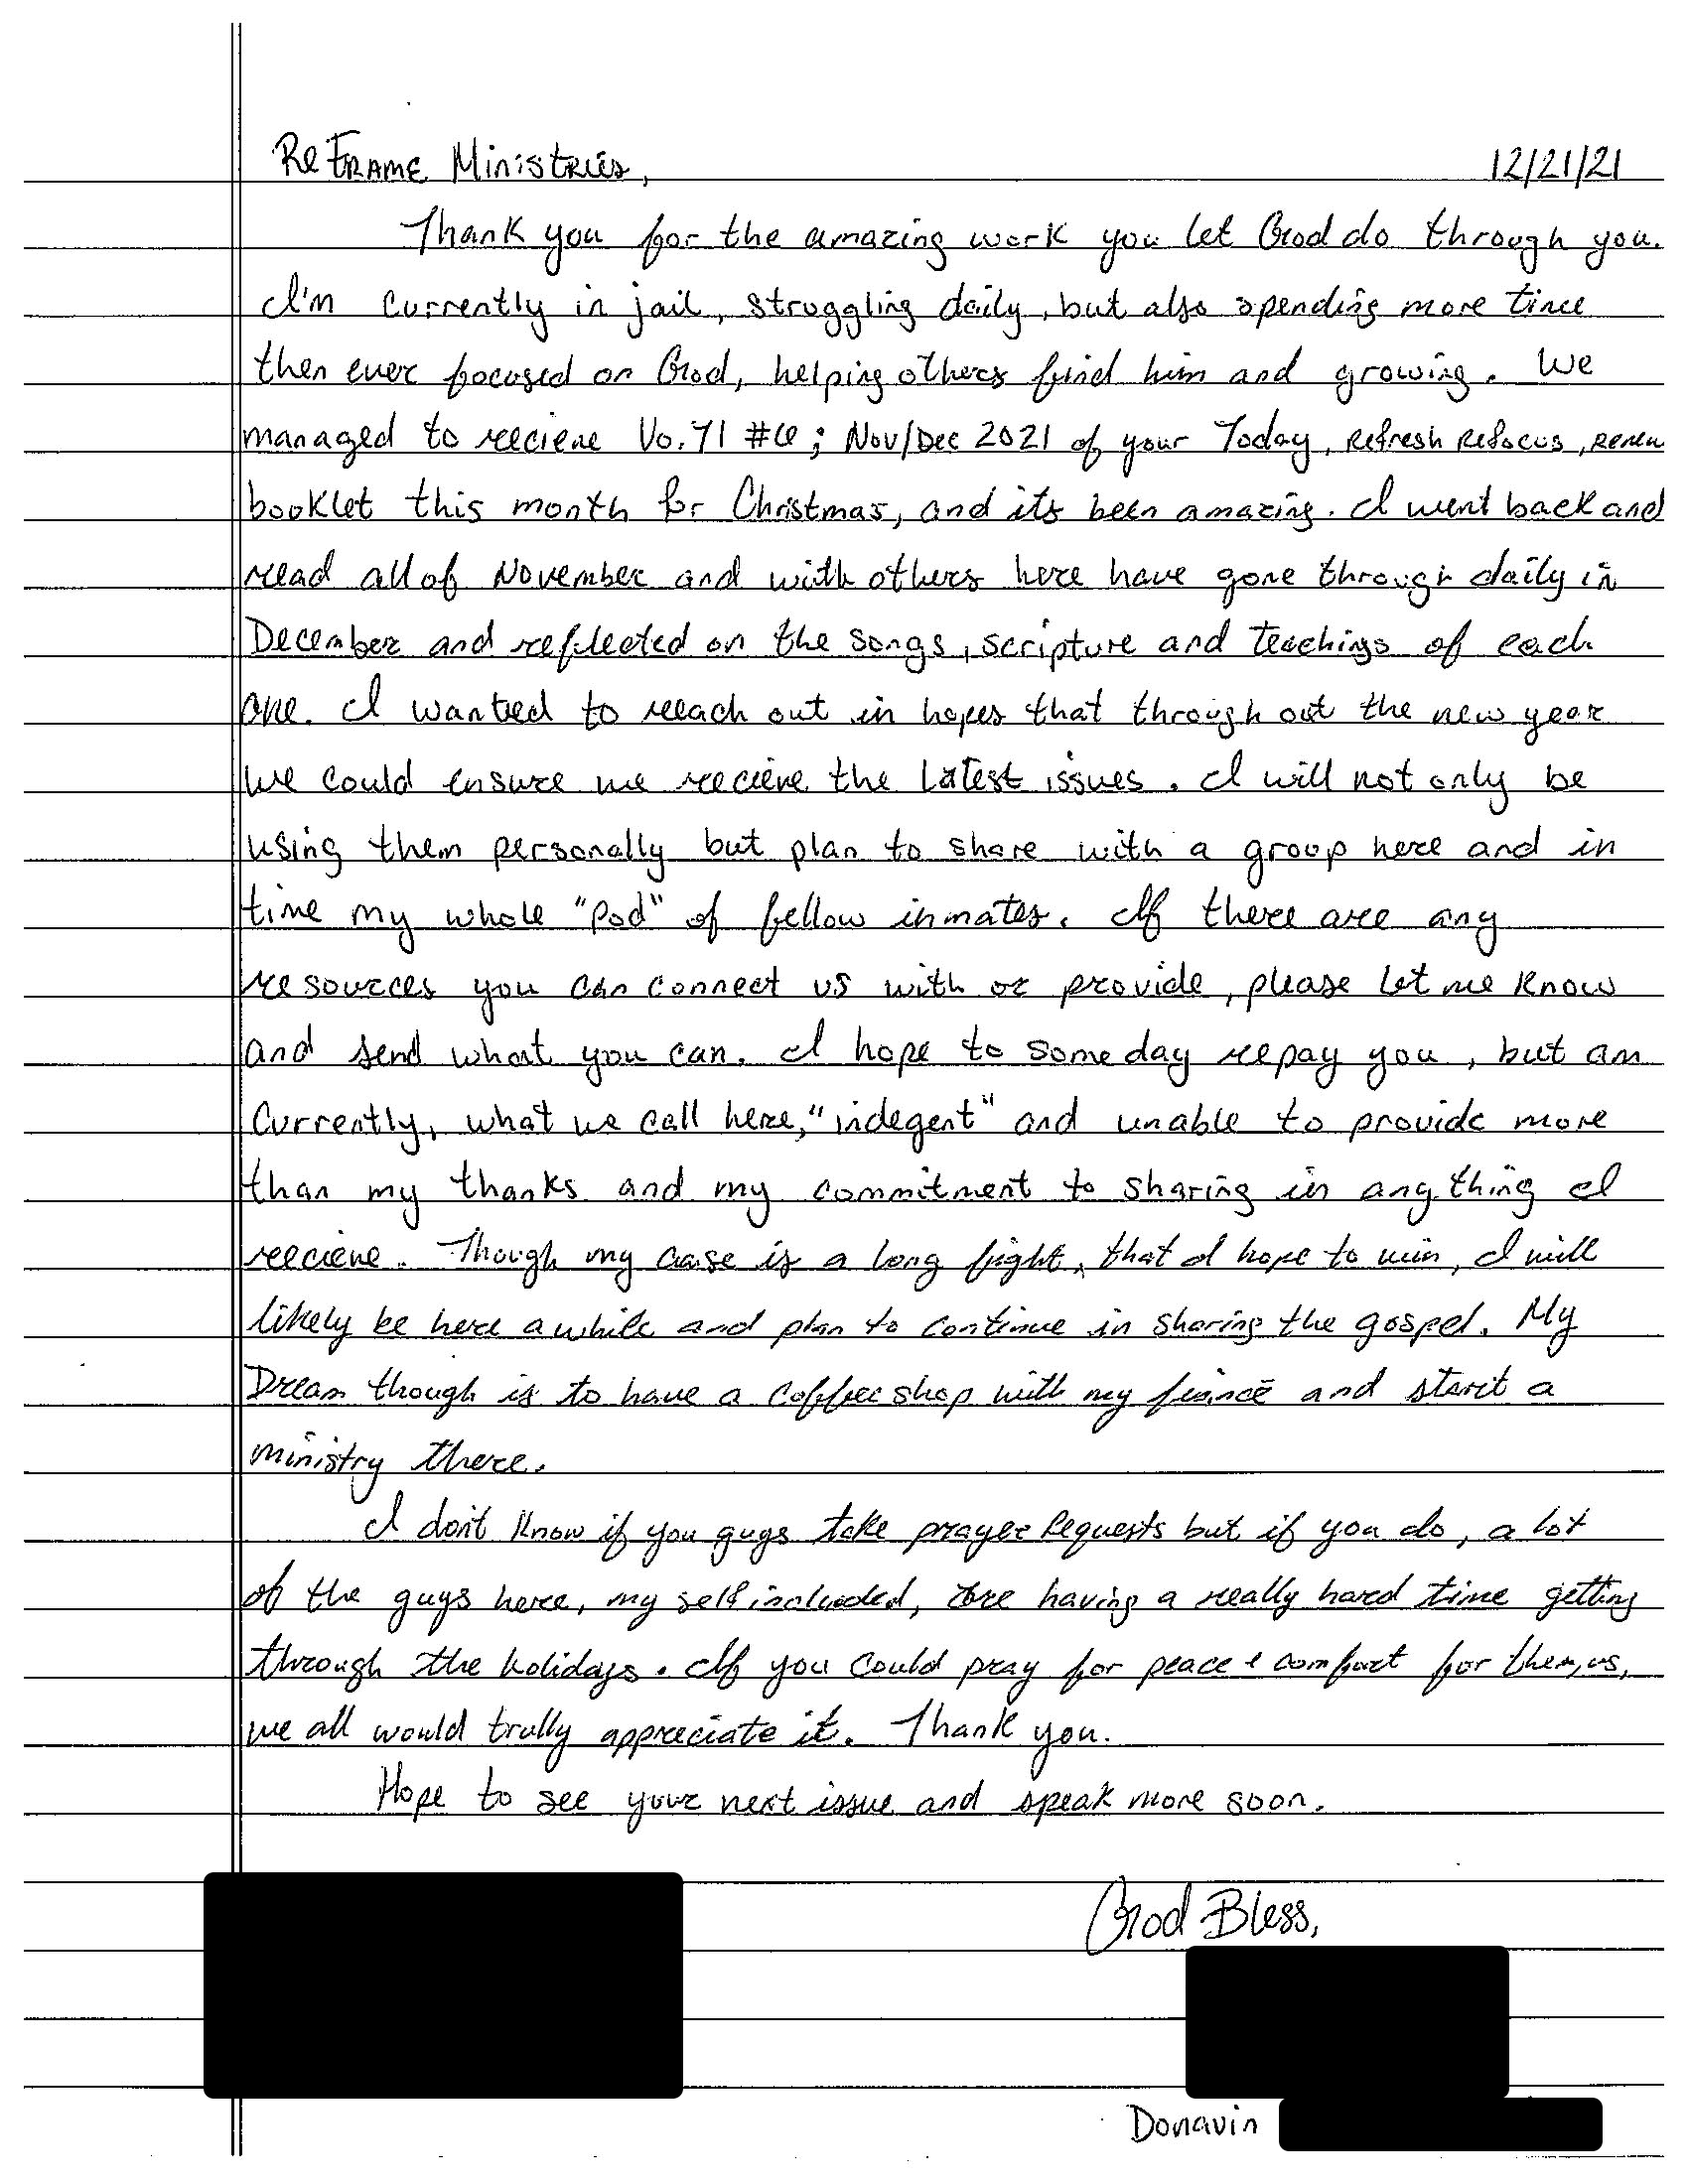 Prison Letter 1